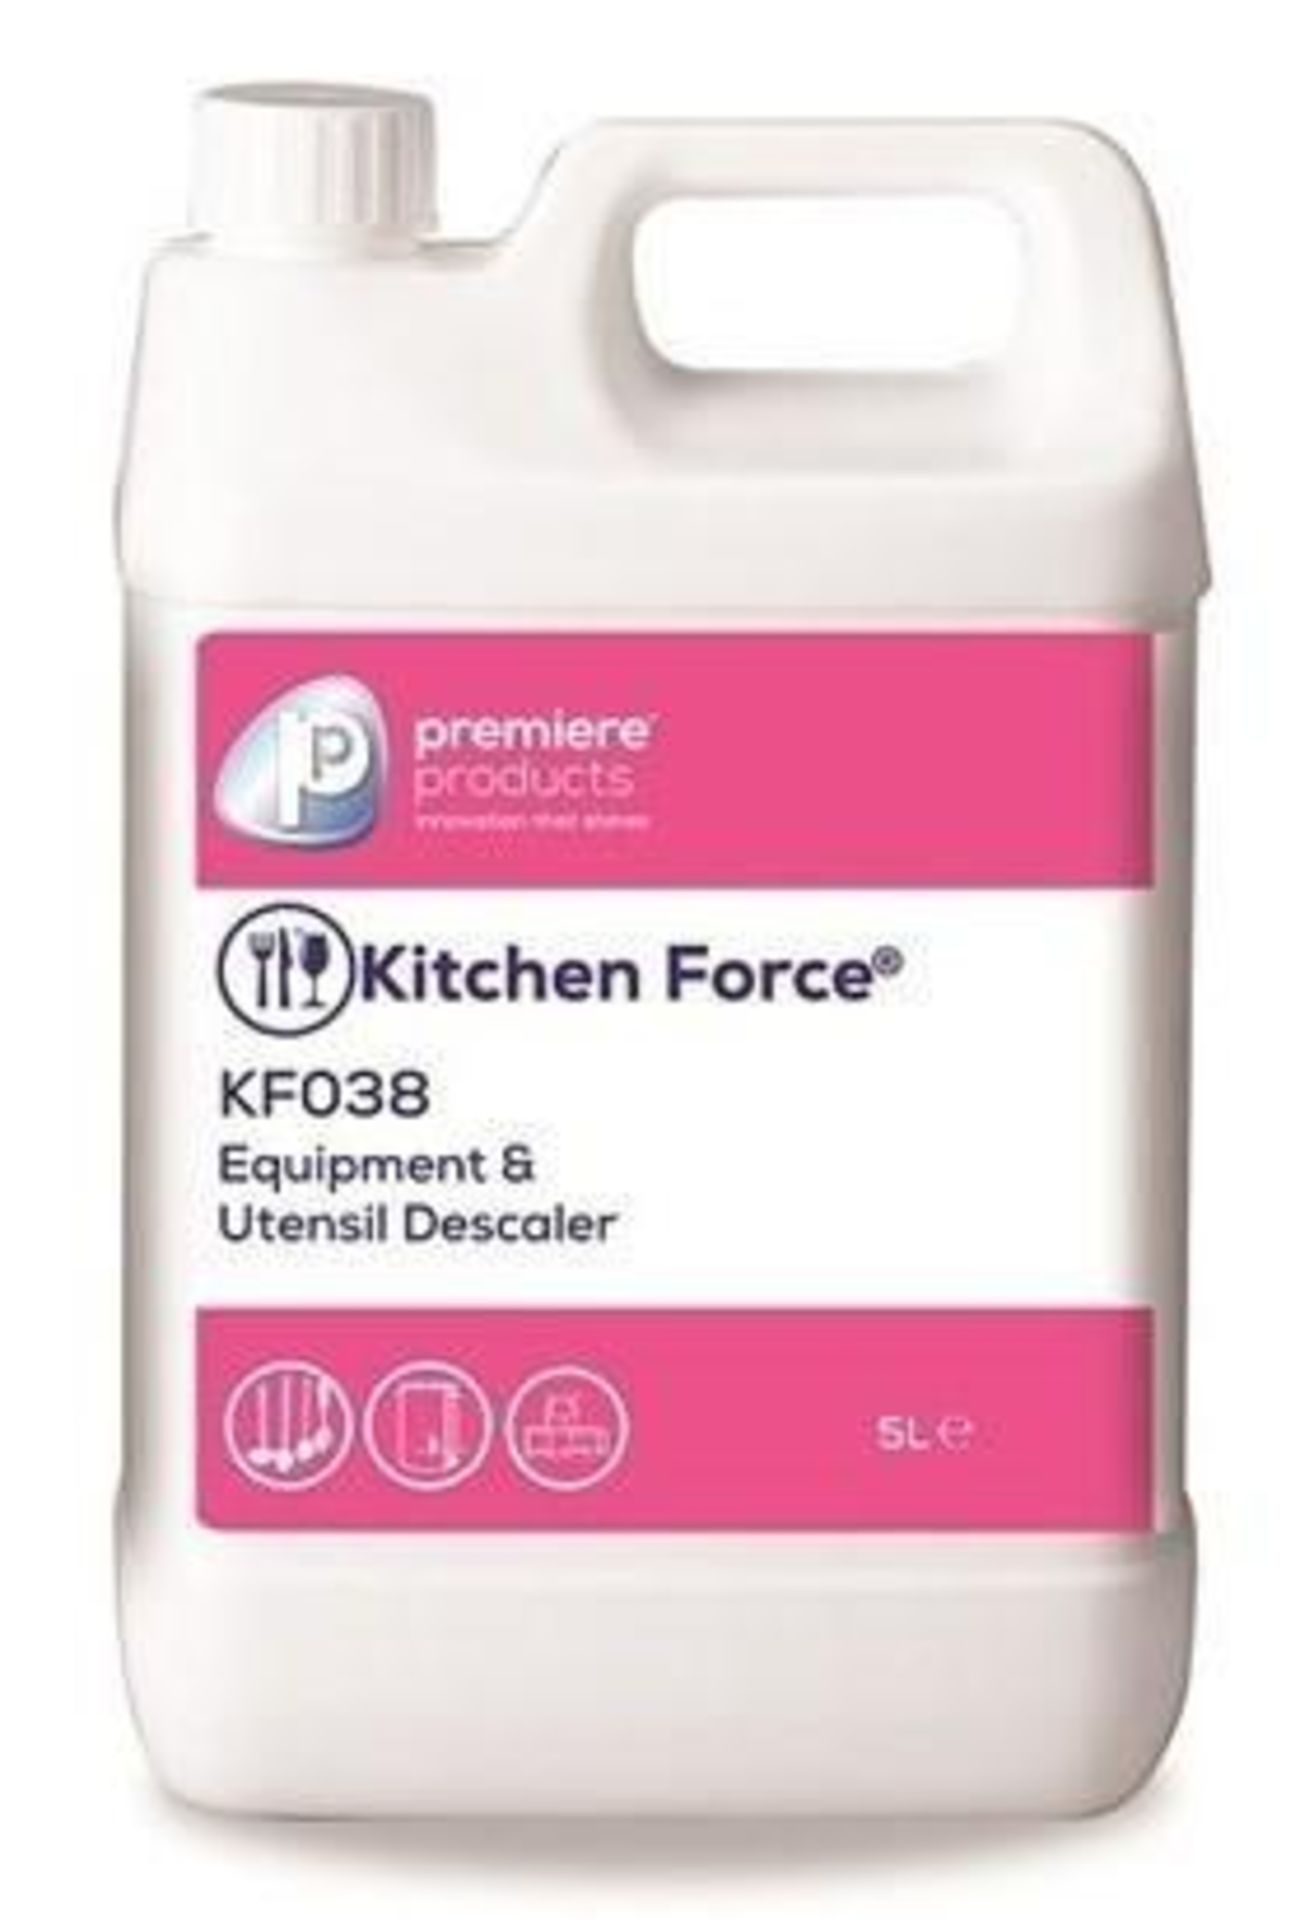 10 x Kitchen Force 5 Litre Equipment &amp; Utensil Descaler - Premiere Products - For Descaling Kitc